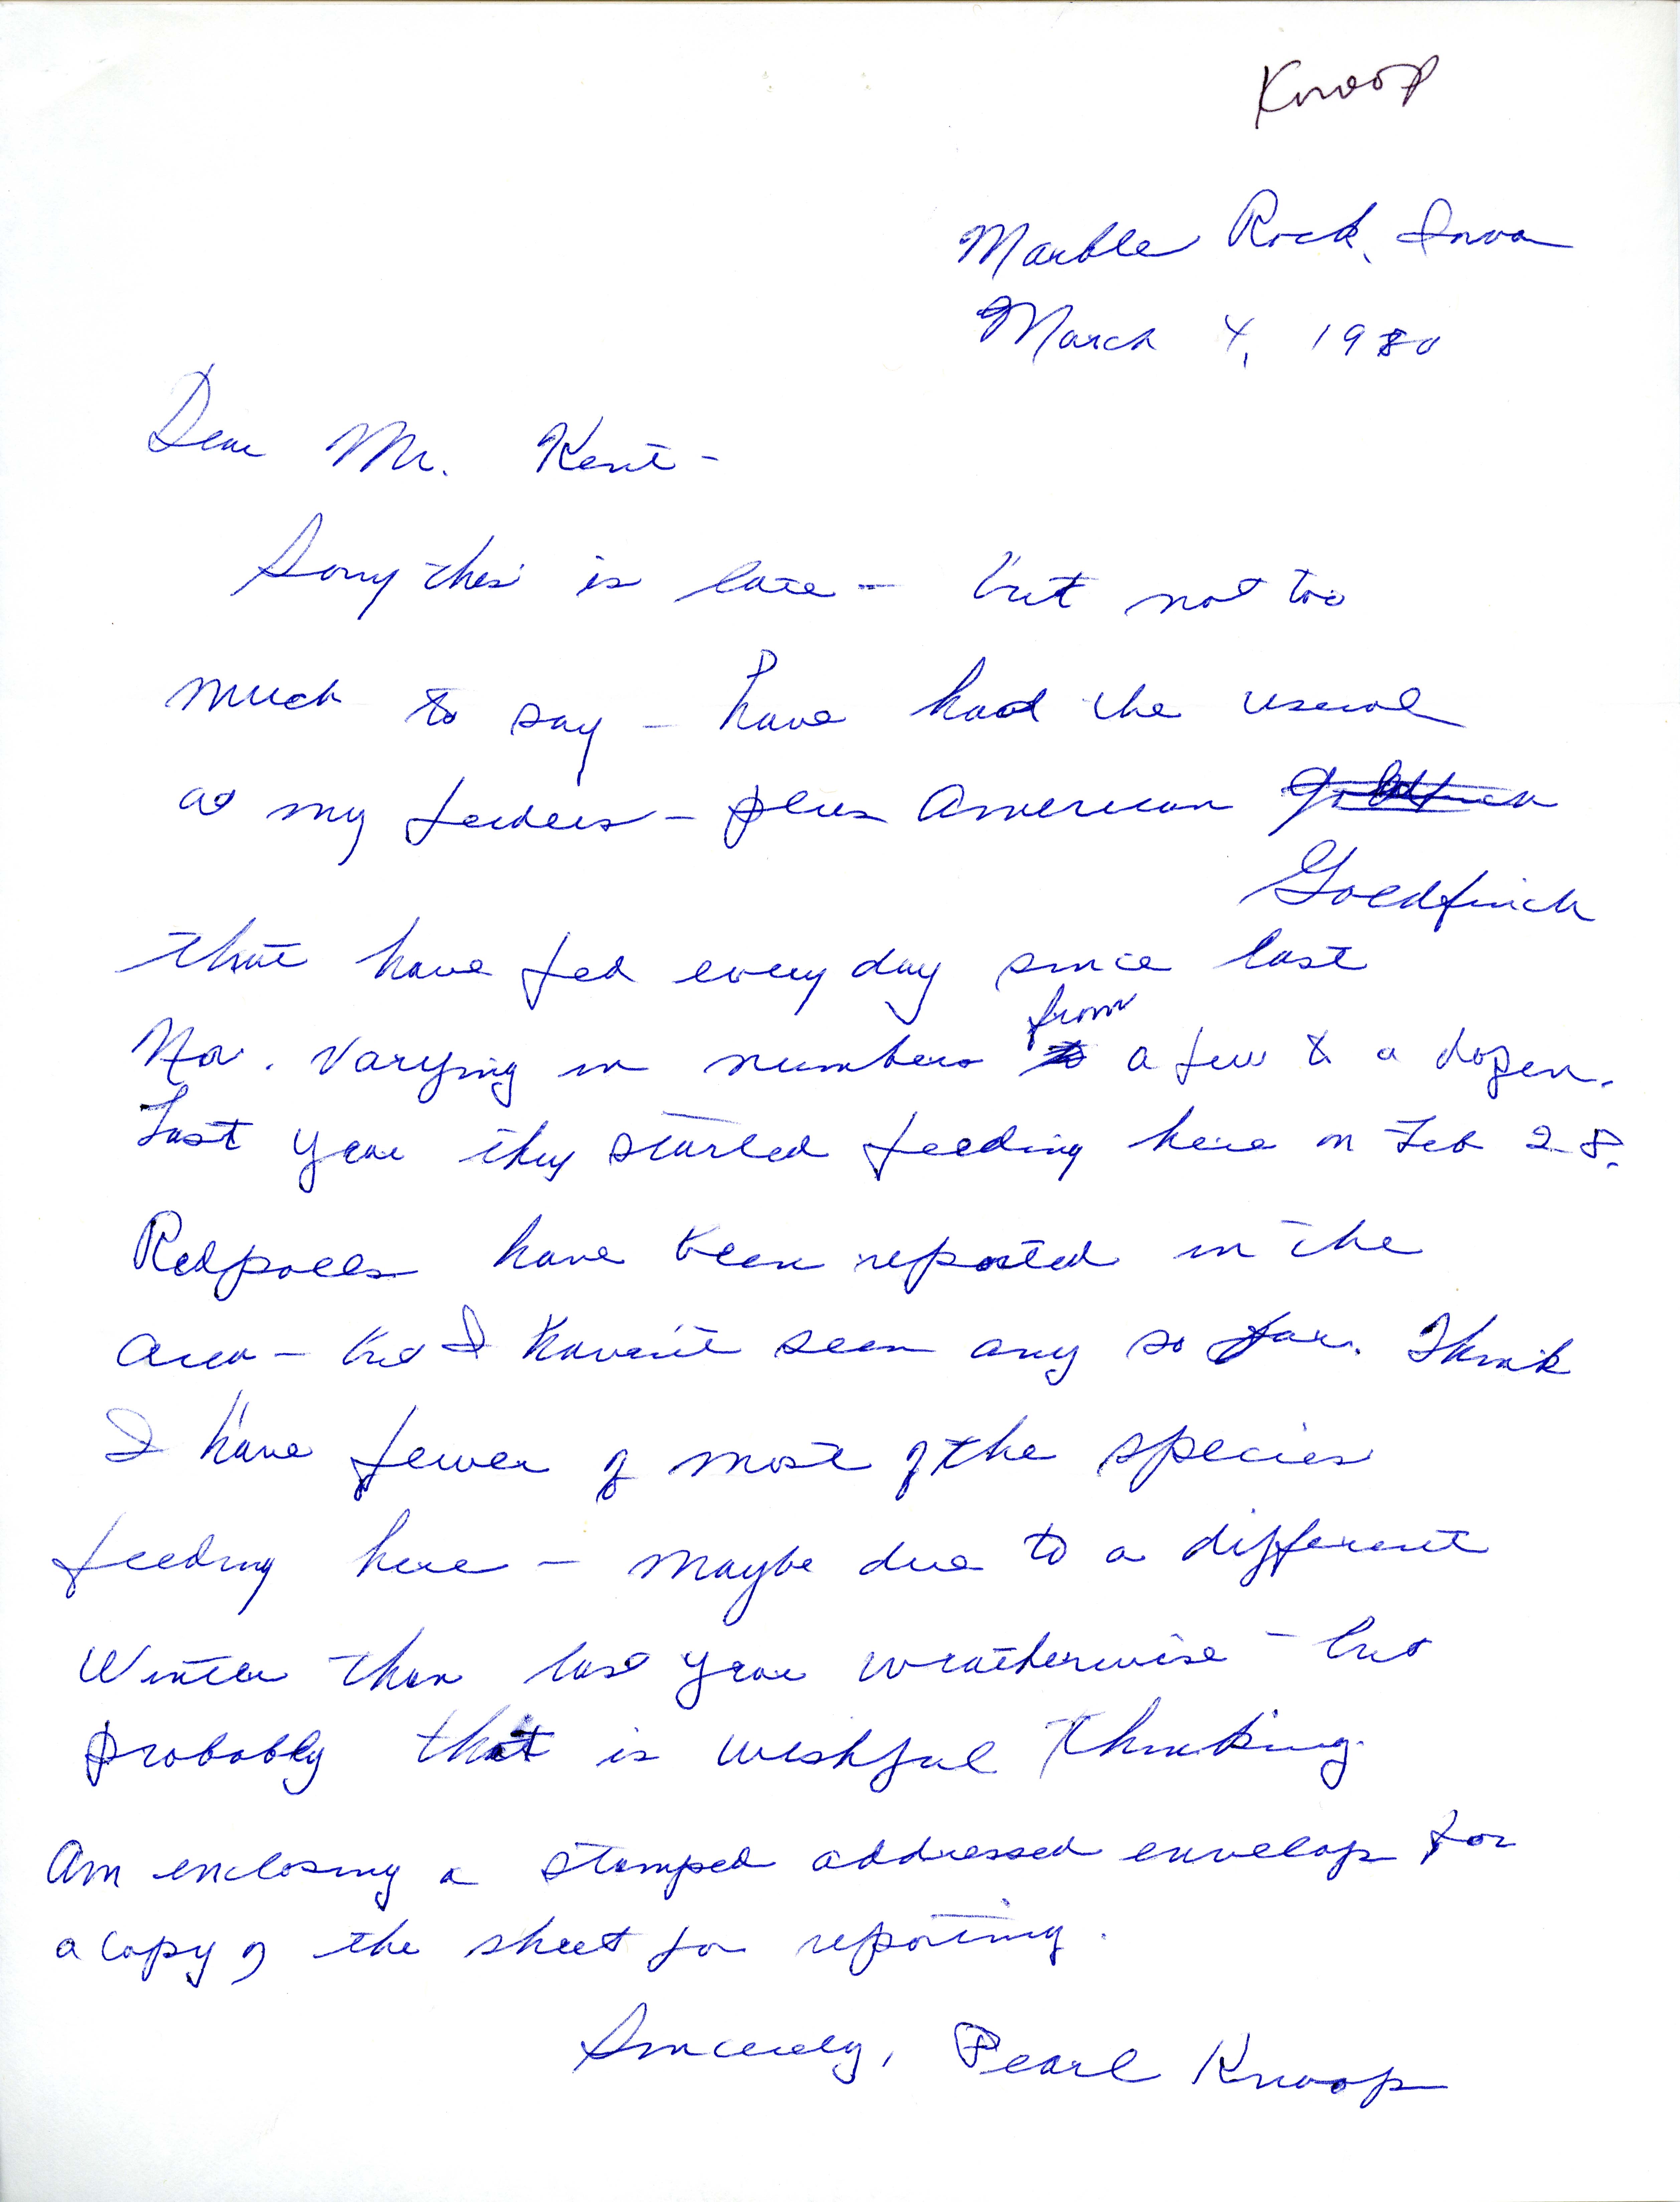 Pearl Knoop letter to Thomas H. Kent regarding bird sightings, March 4, 1980